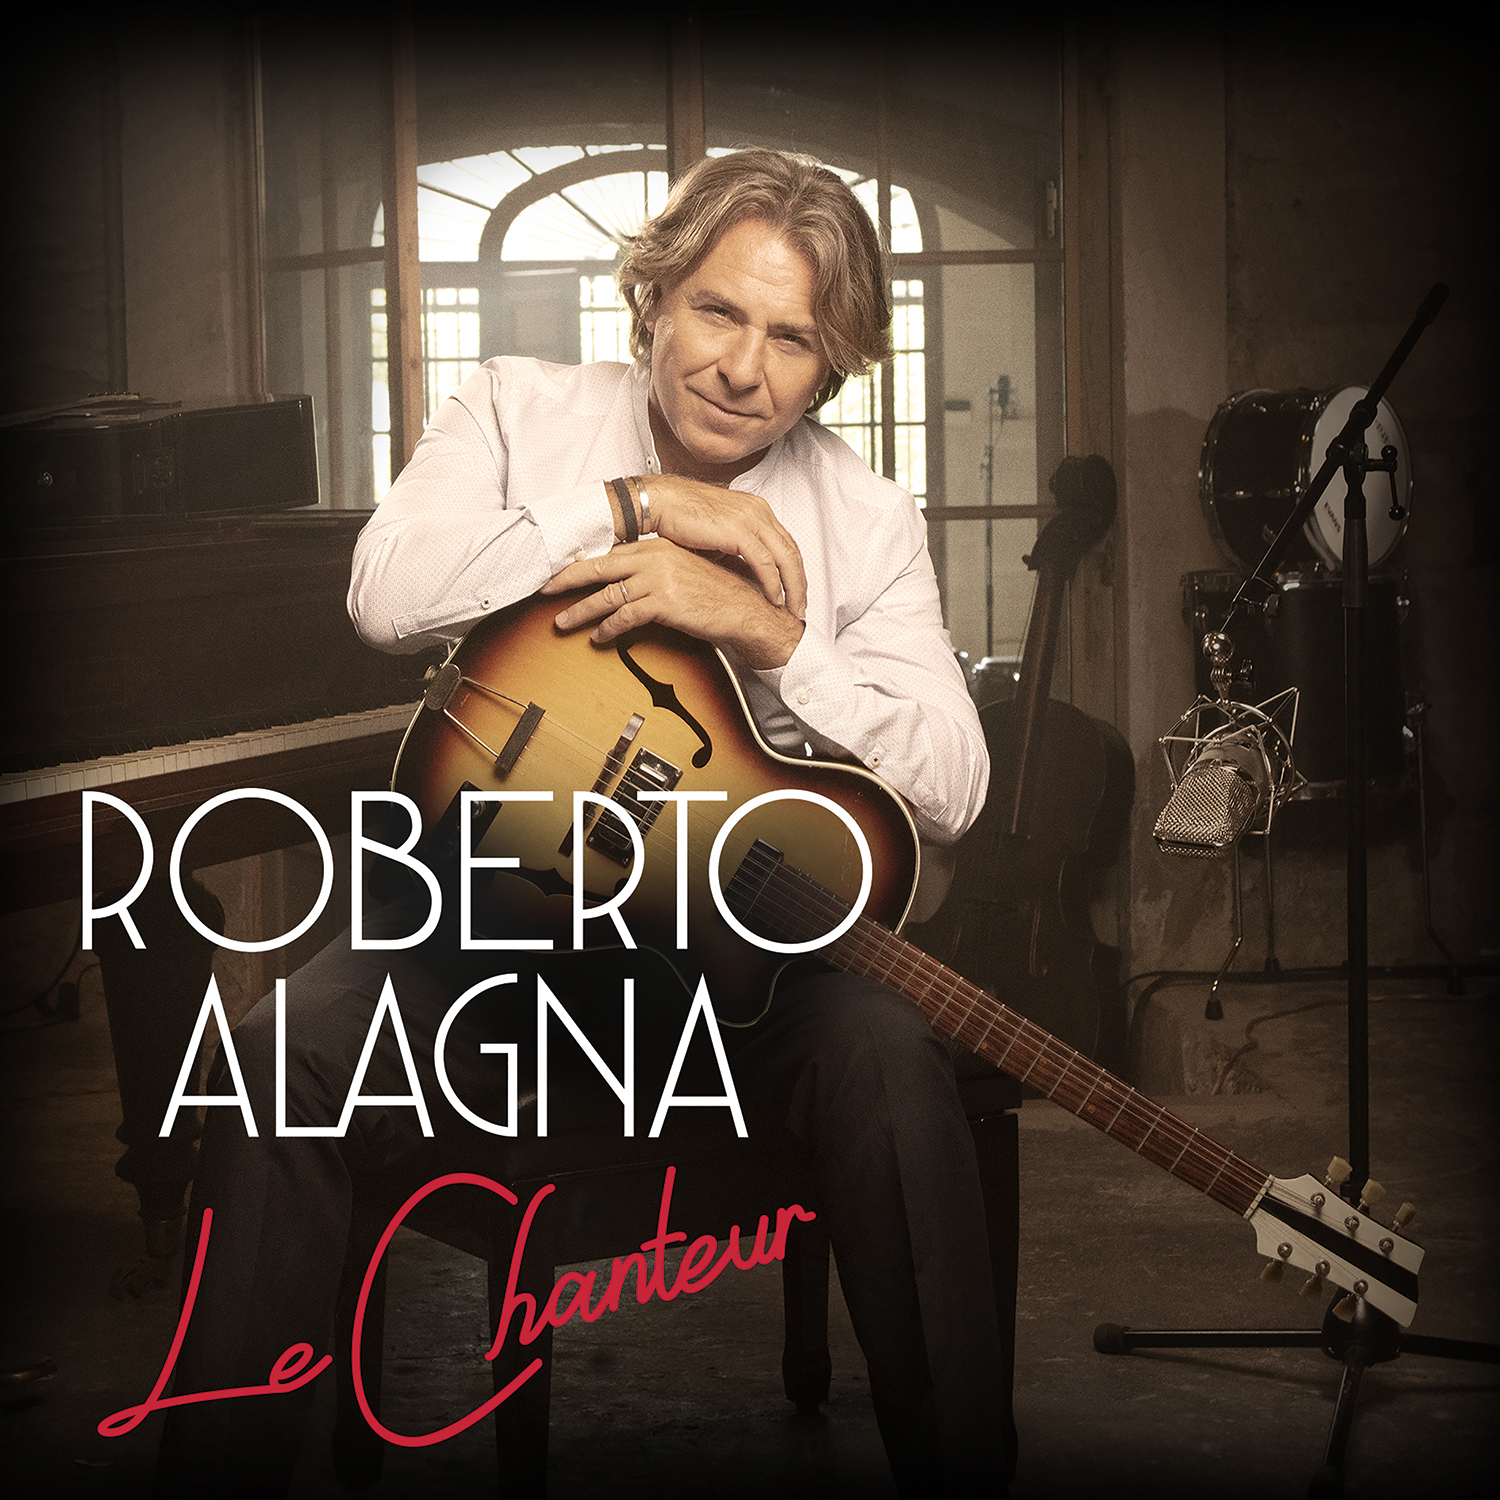 Roberto Alagna - Le Chanteur